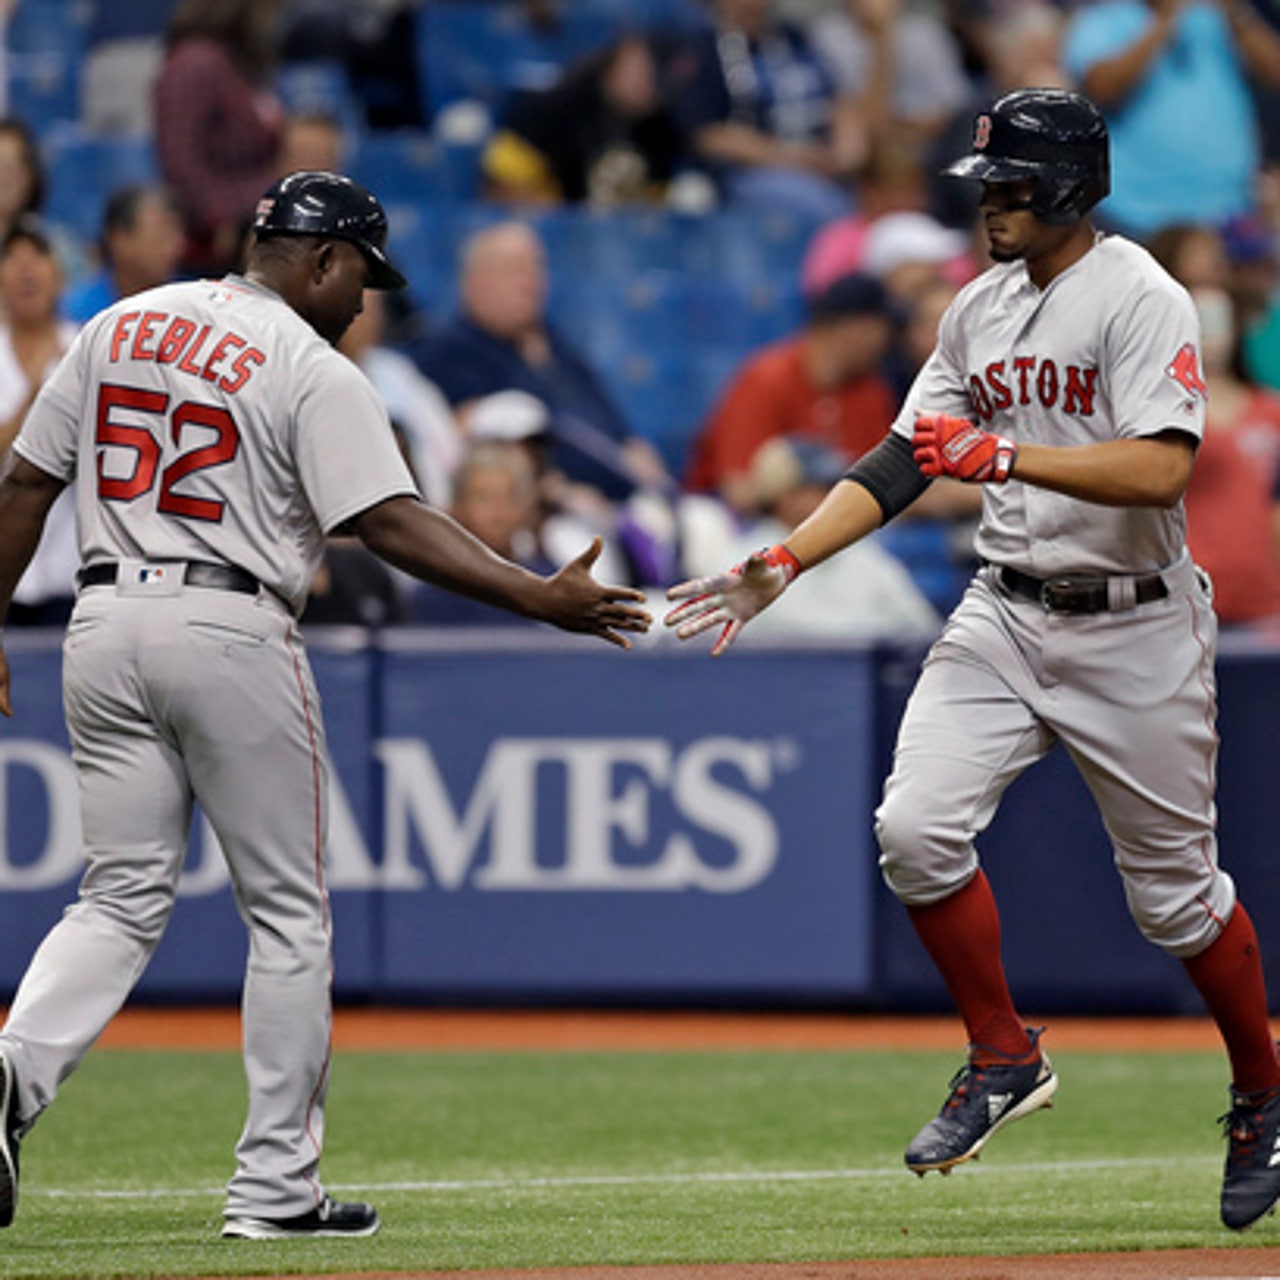 Ryan strong, Twins' bats heat up in Boston's Fenway opener